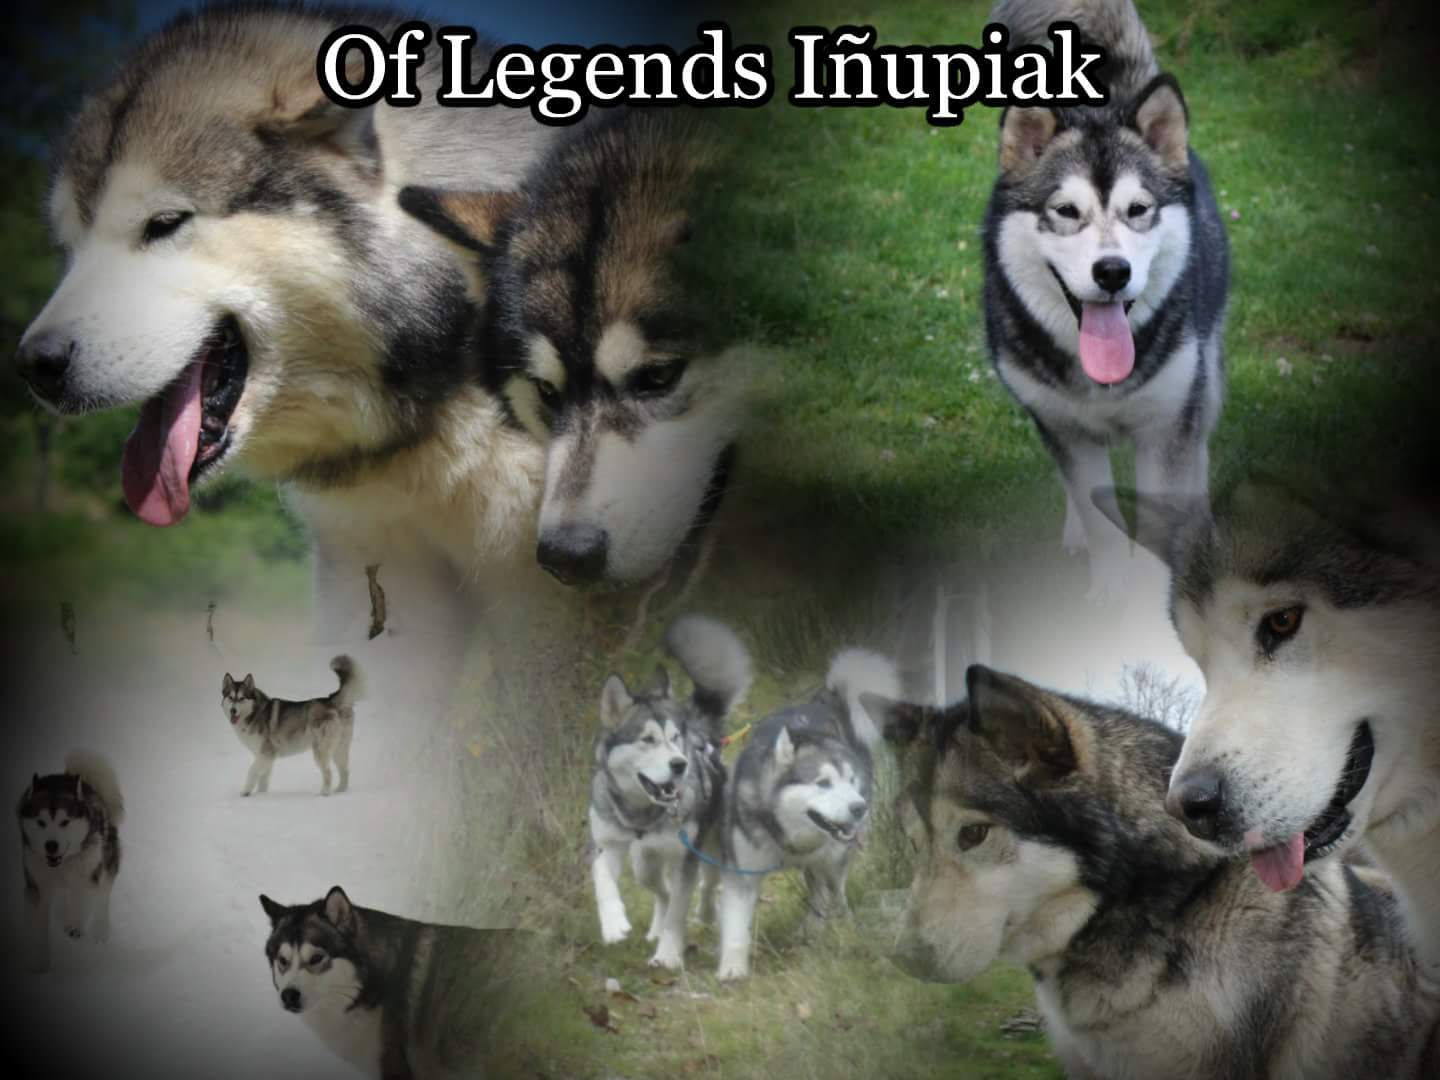 Of Legends Inupiak